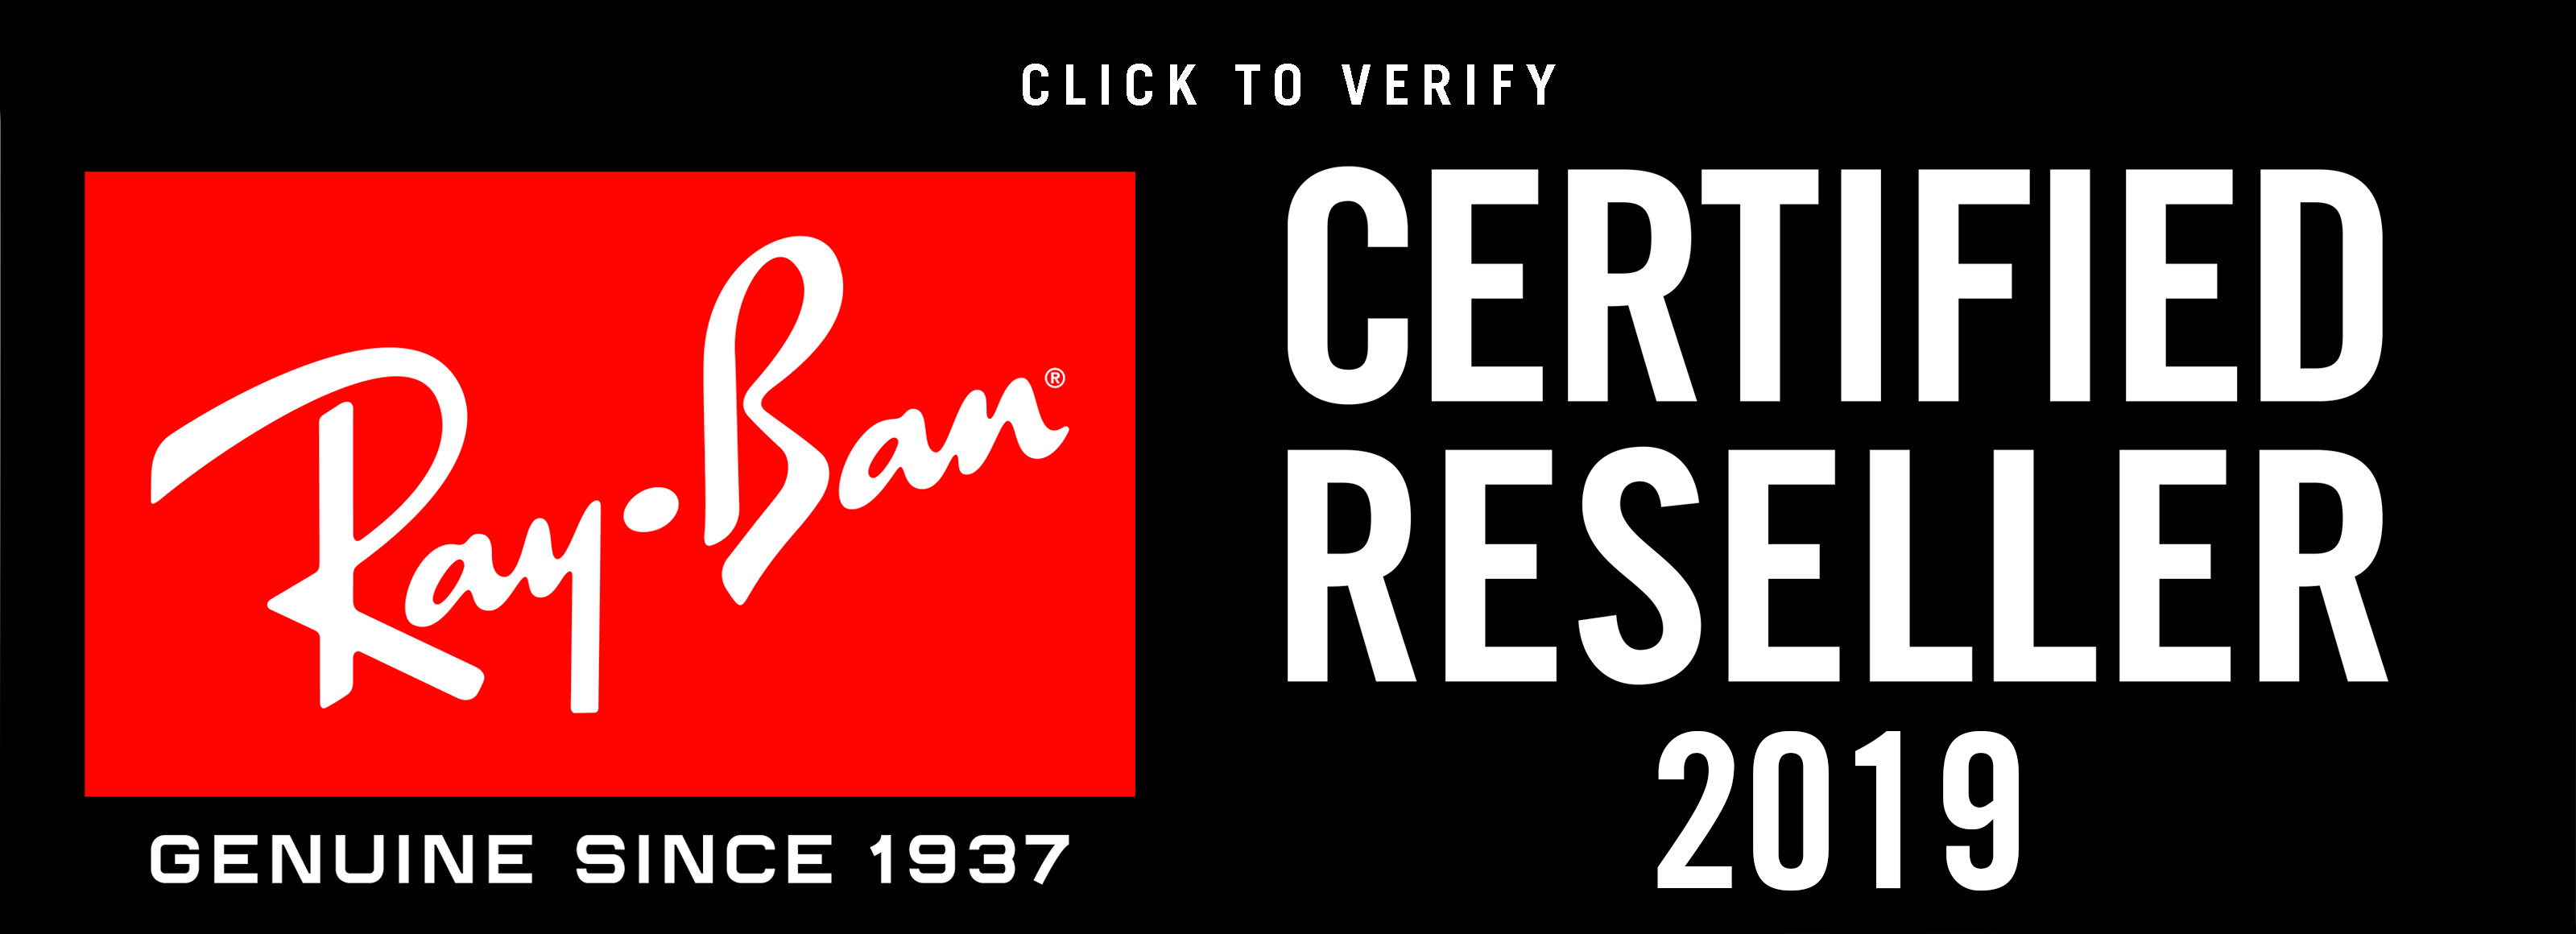 Certified Reseller 2019!